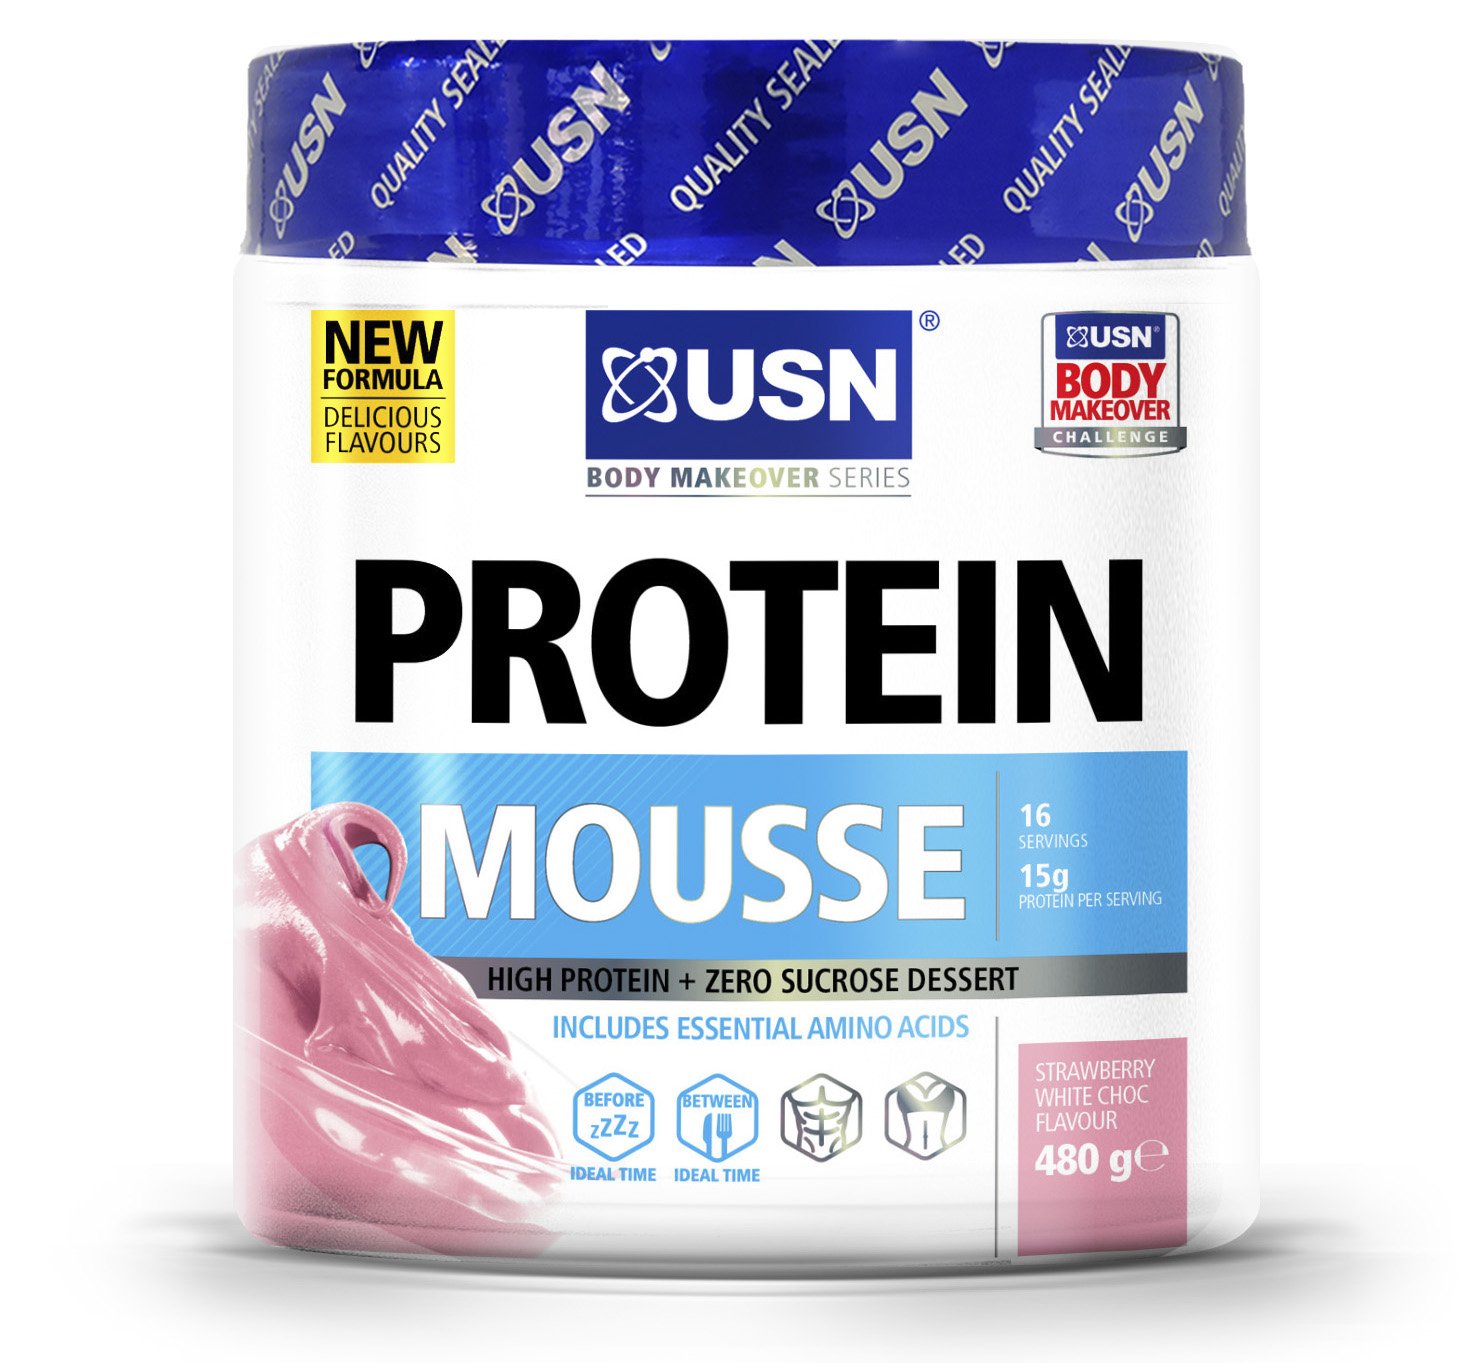 Protein Mousse, 480 g, USN. Milk protein. 